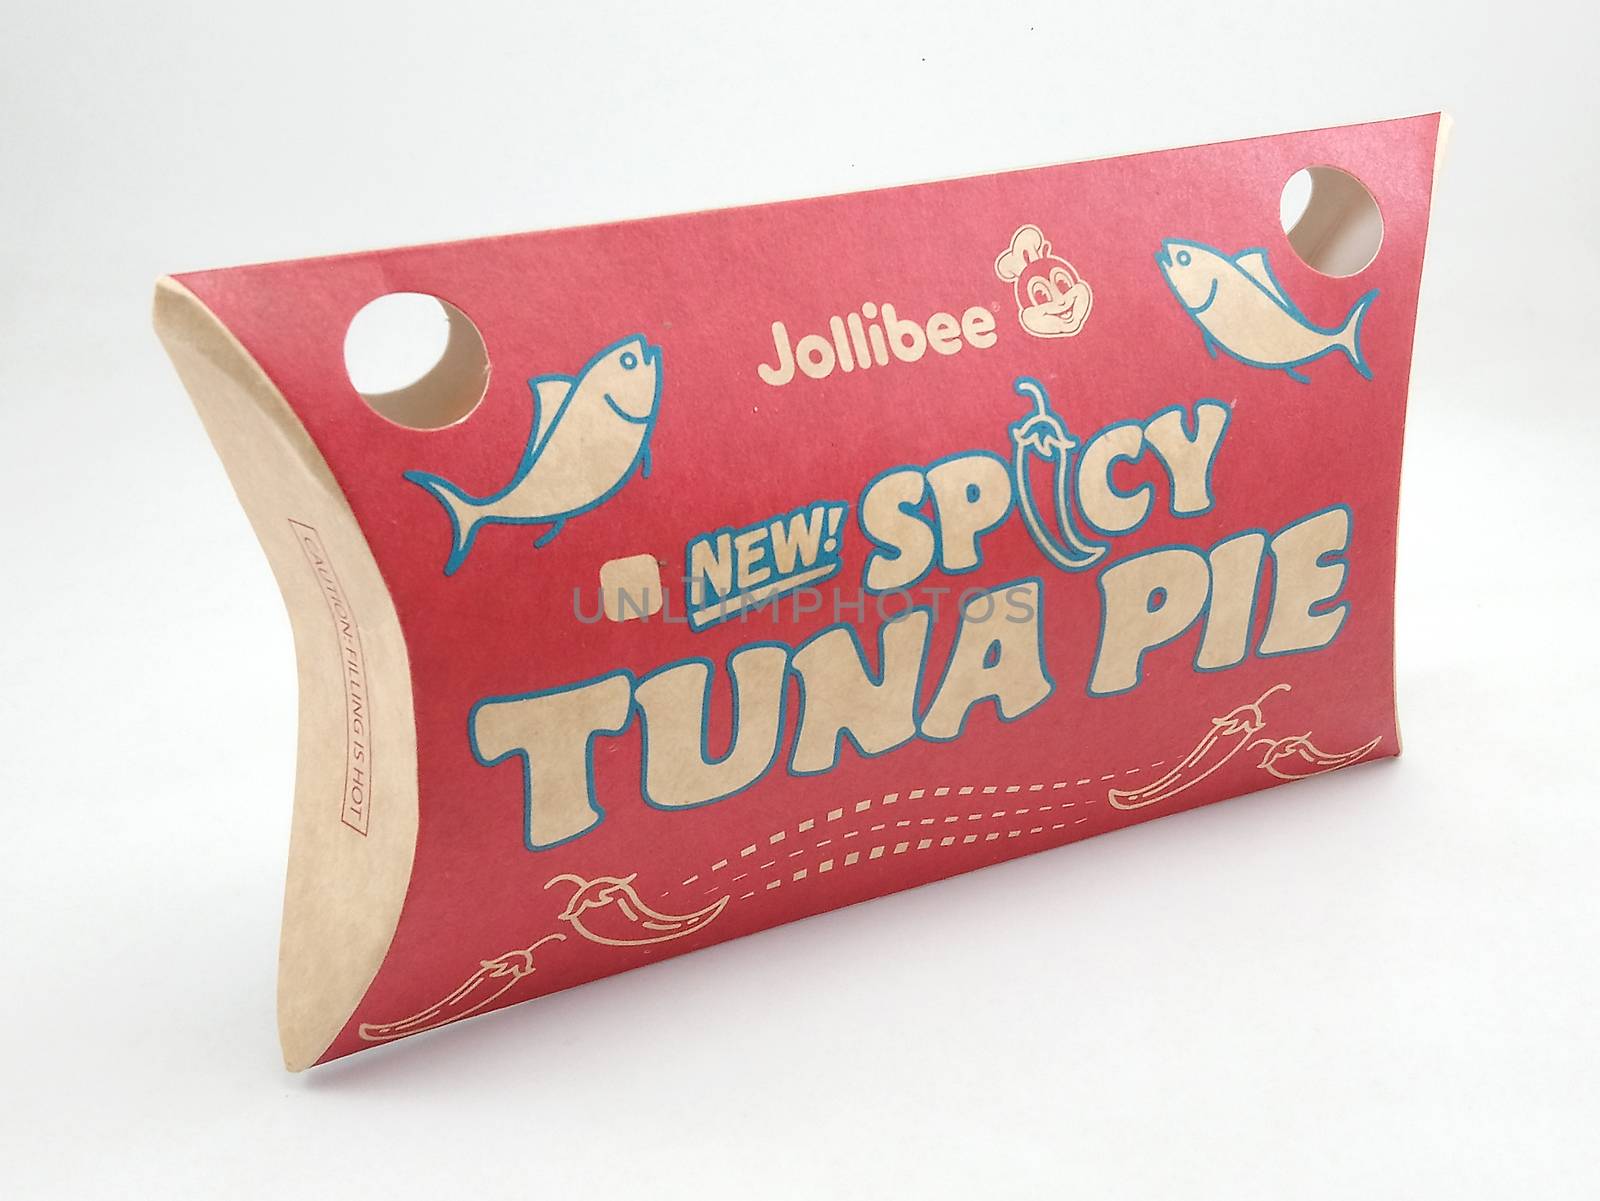 Jollibee spicy tuna pie in Manila, Philippines by imwaltersy